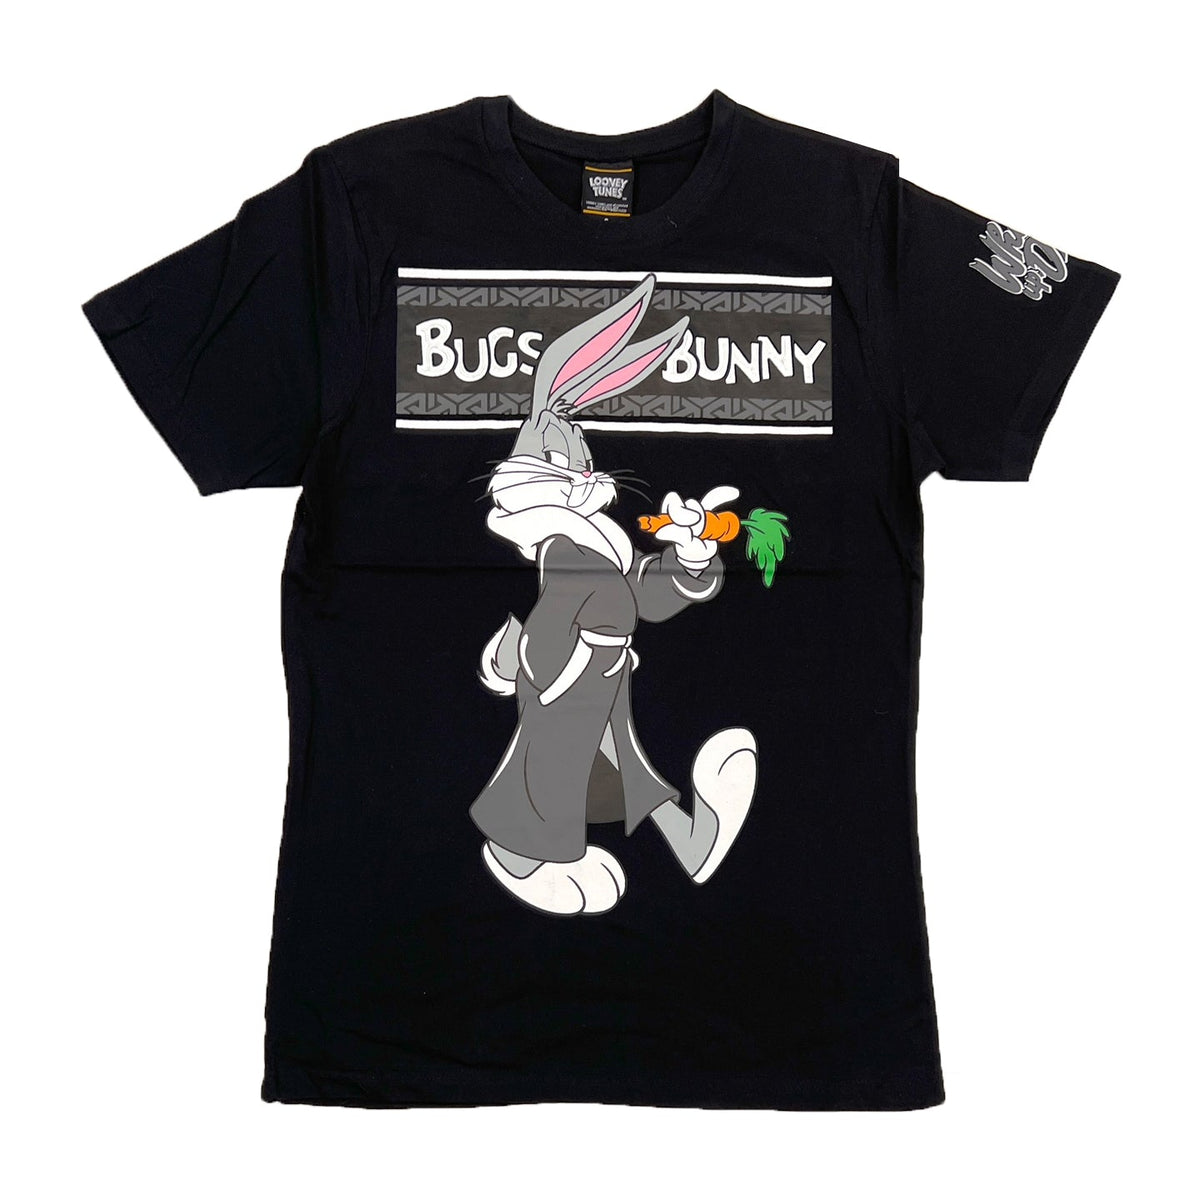 / $16.99 Tunes $30 Bunny for Bugs Tee Looney 2 (Black)